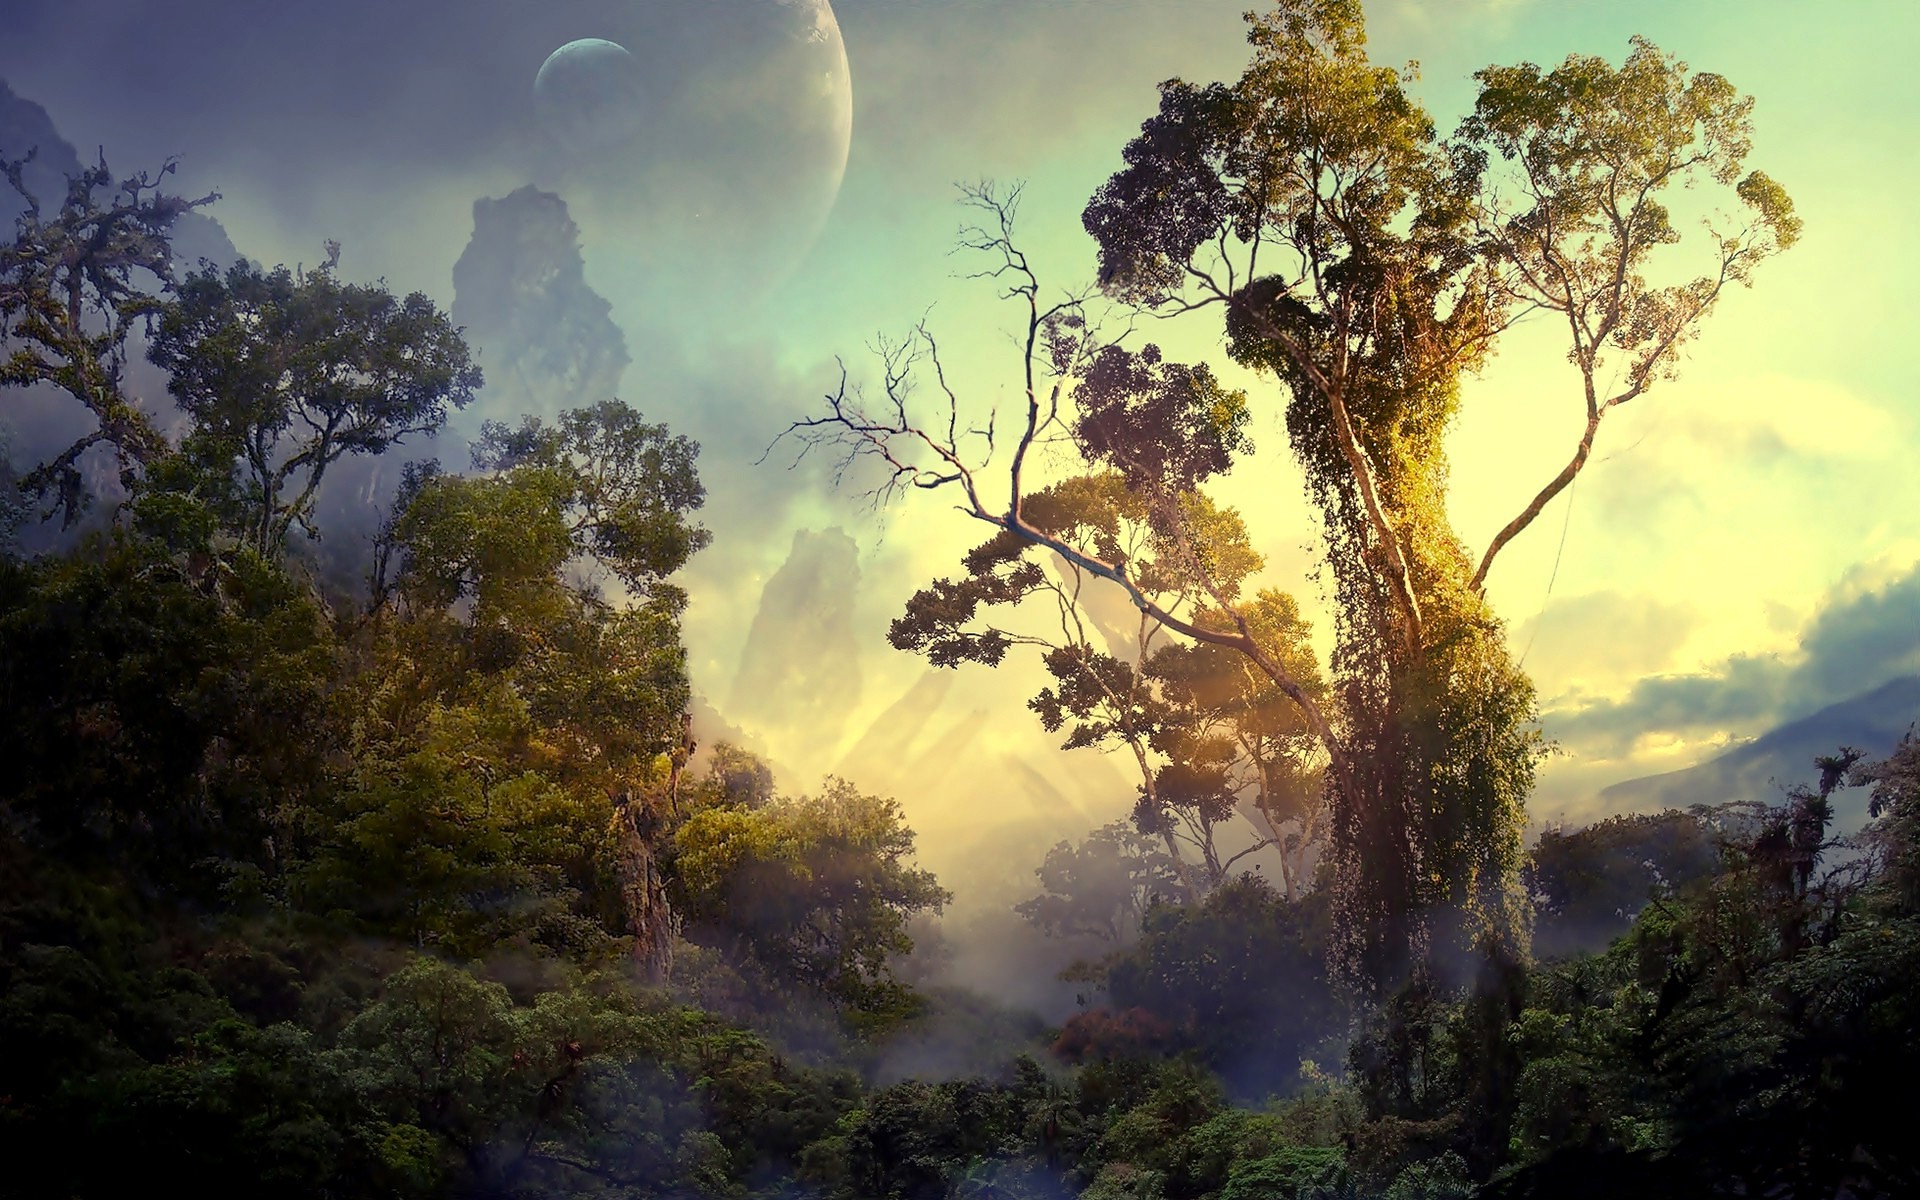 fantasy Art, Digital Art, Nature, Landscape, Trees, Forest, Planet